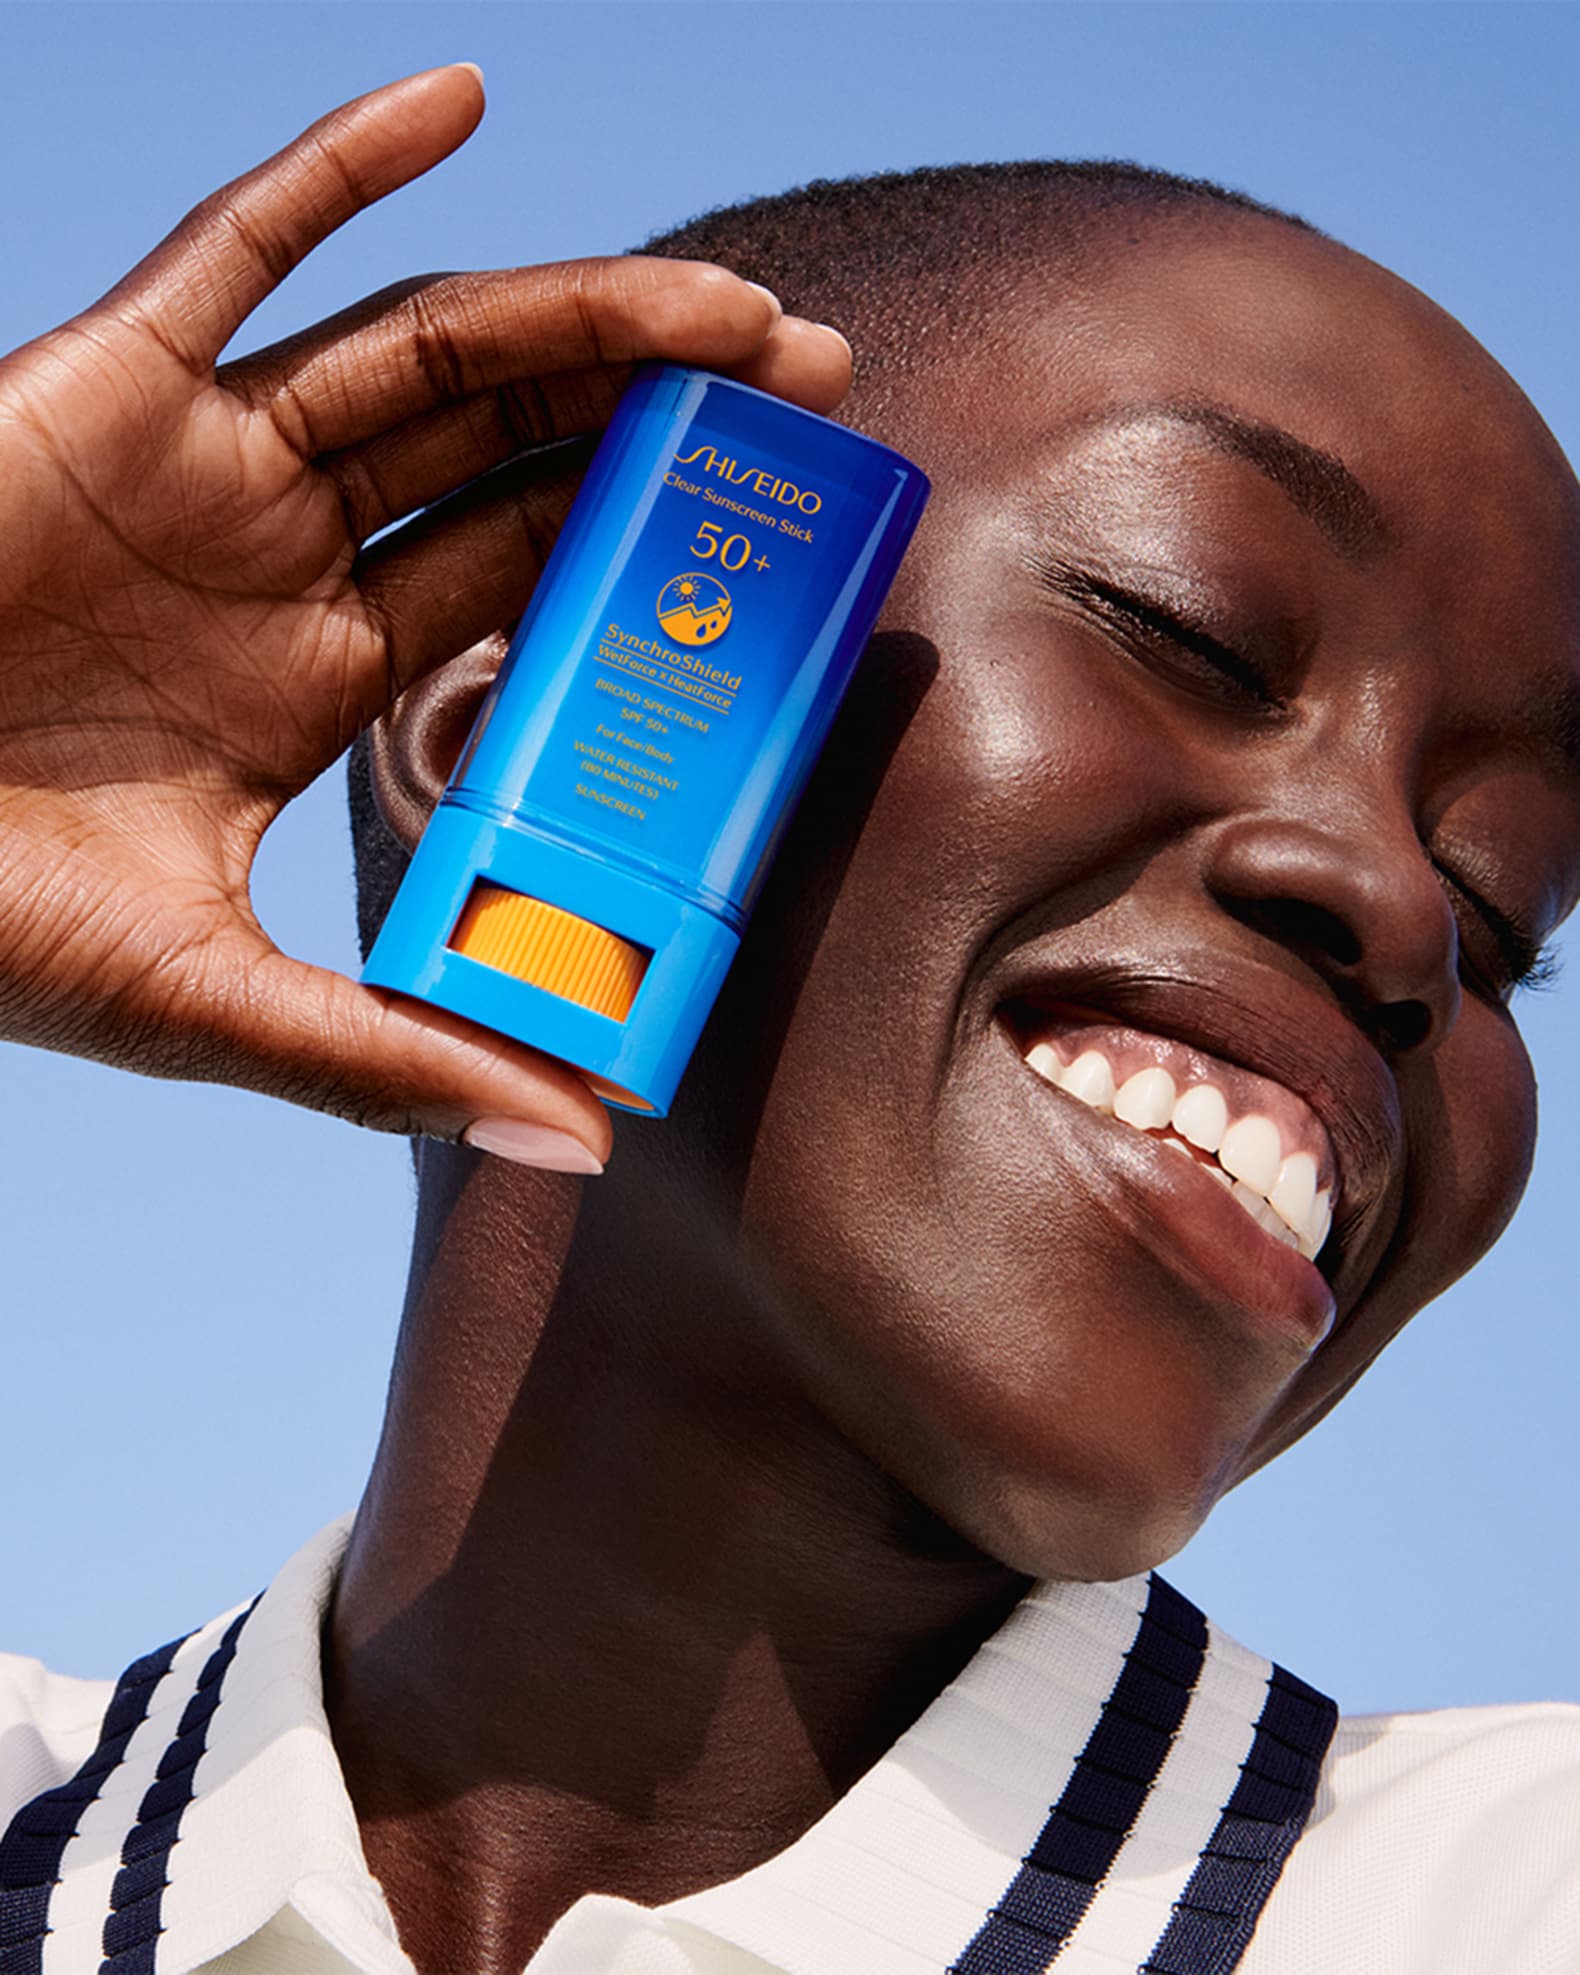 Shiseido Clear Sunscreen Stick SPF 50+ | Neiman Marcus